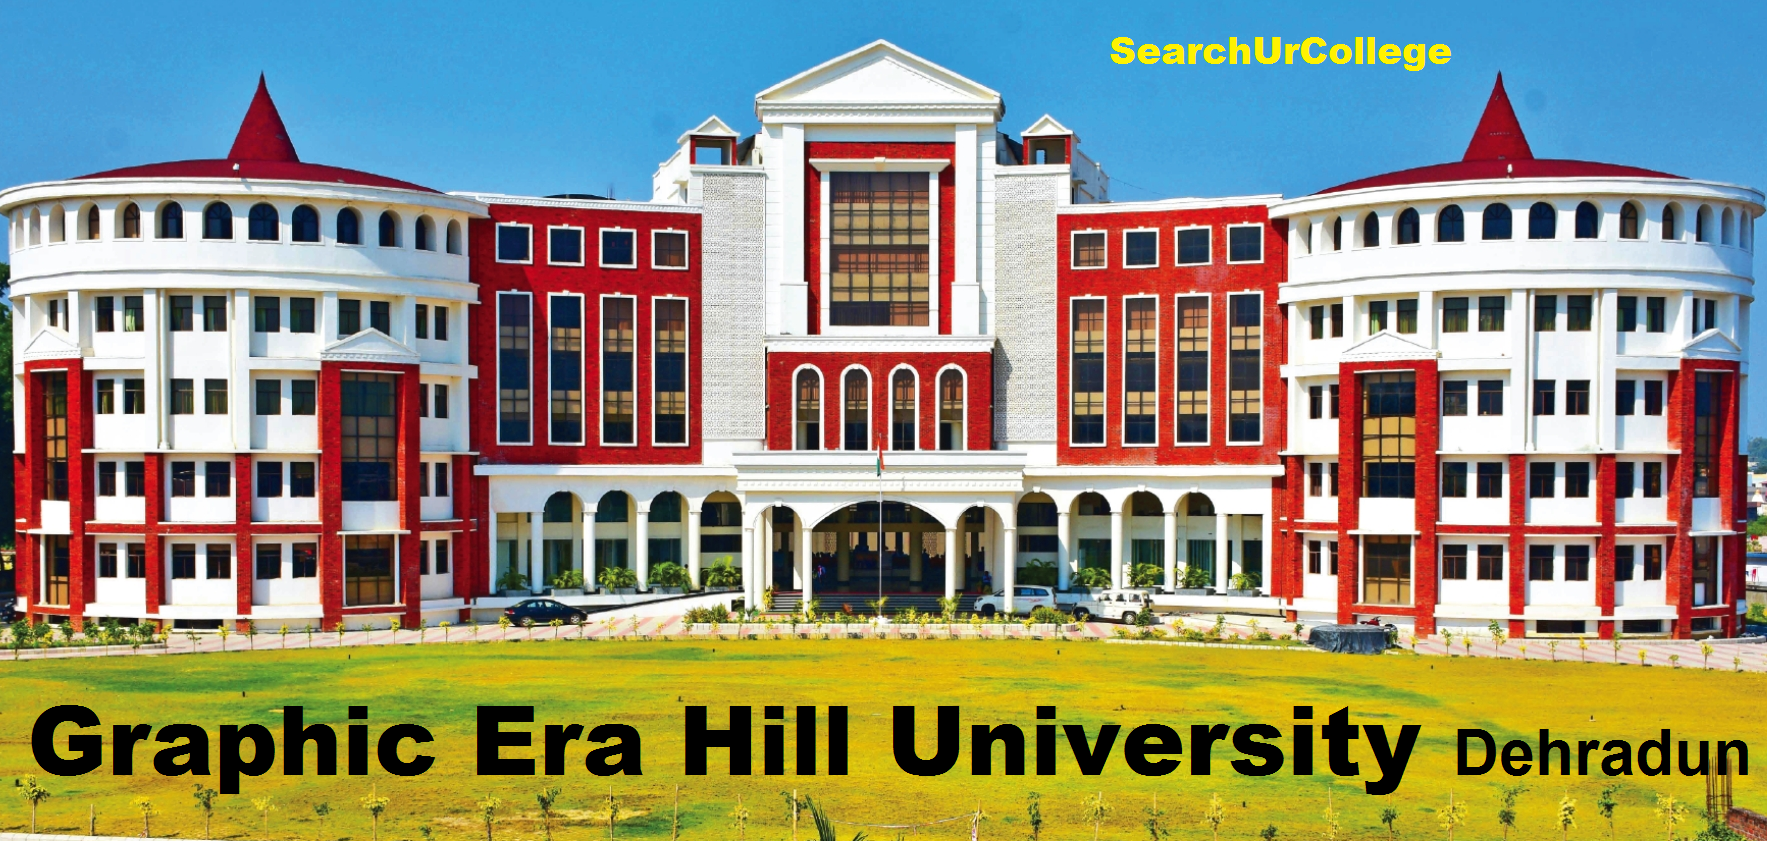 Graphic Era Hill University Dehradun